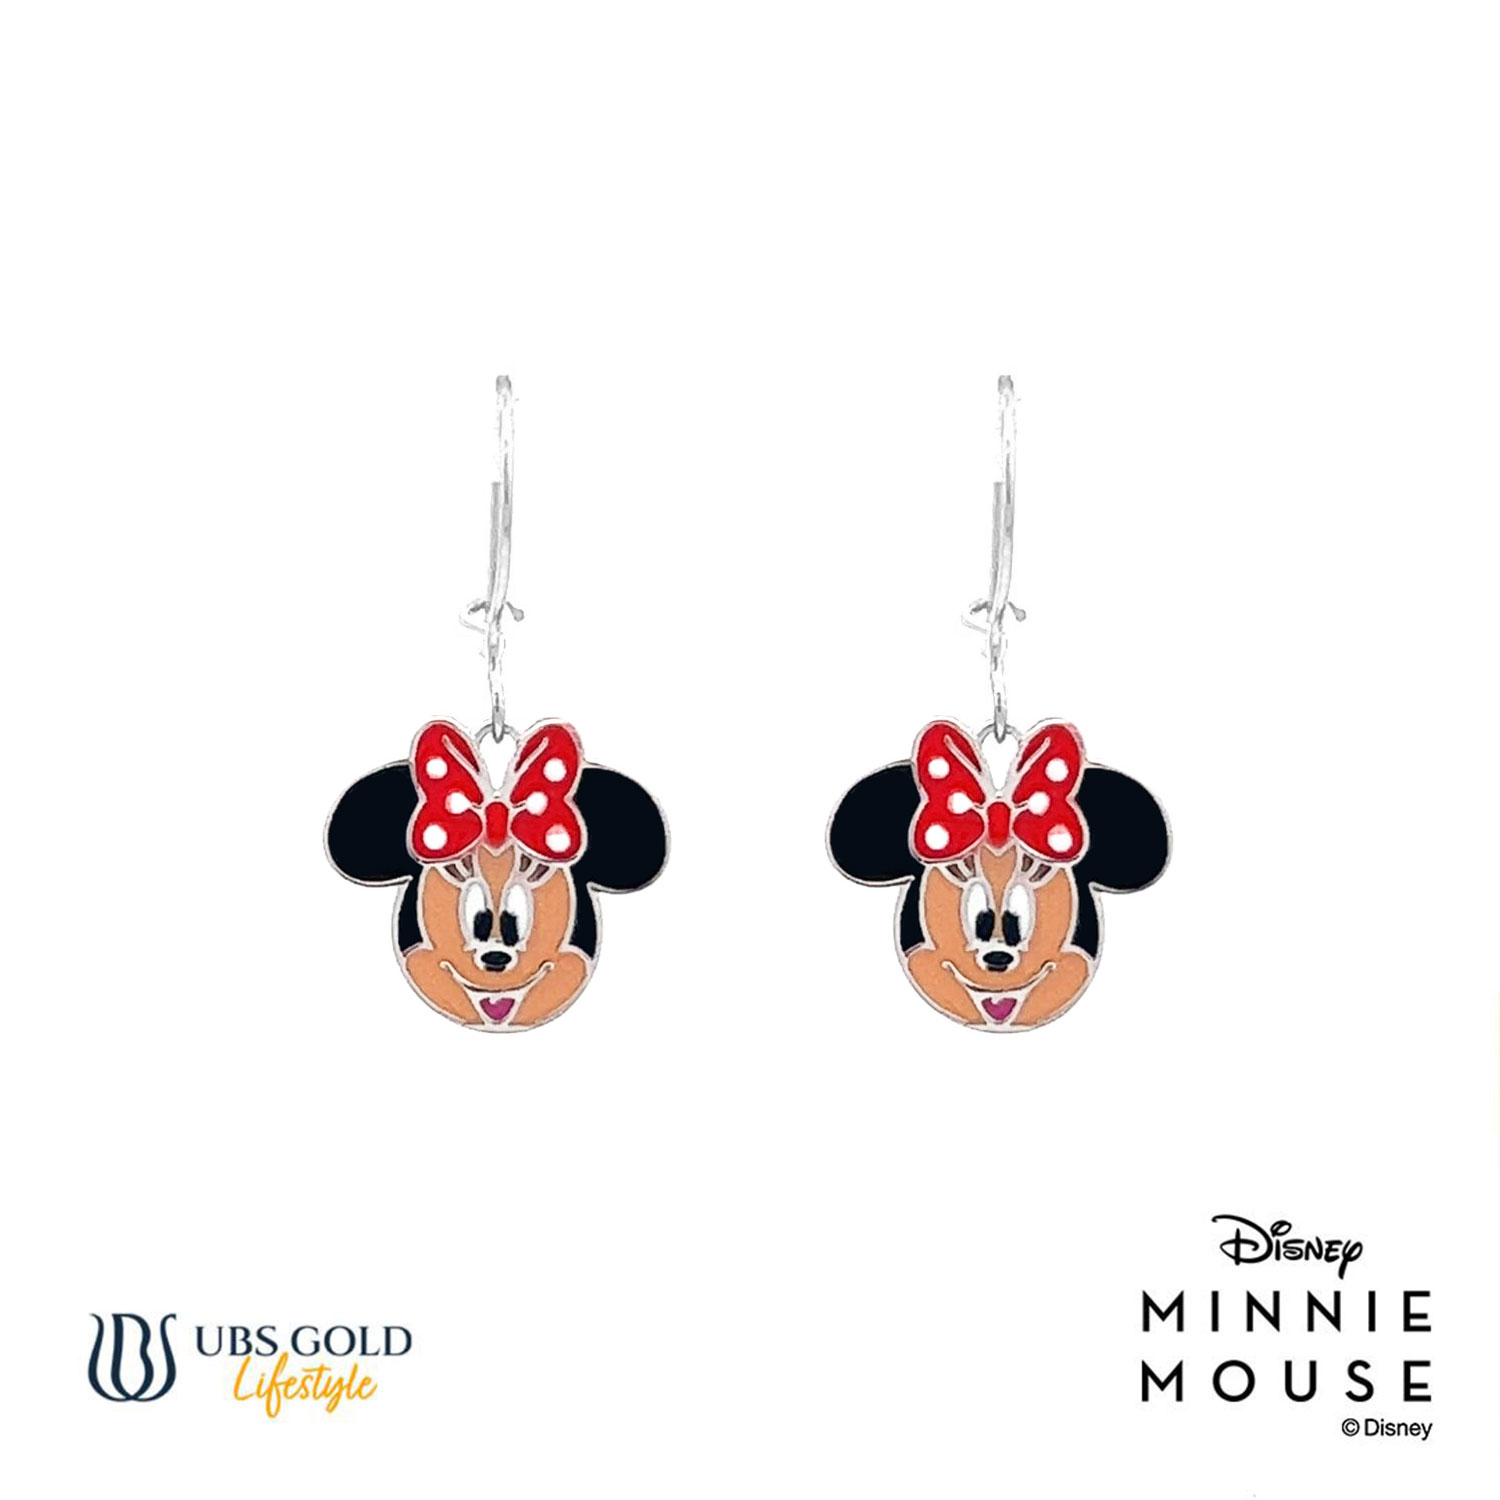 UBS Anting Emas Anak Disney Minnie Mouse - Aay0084 - 17K